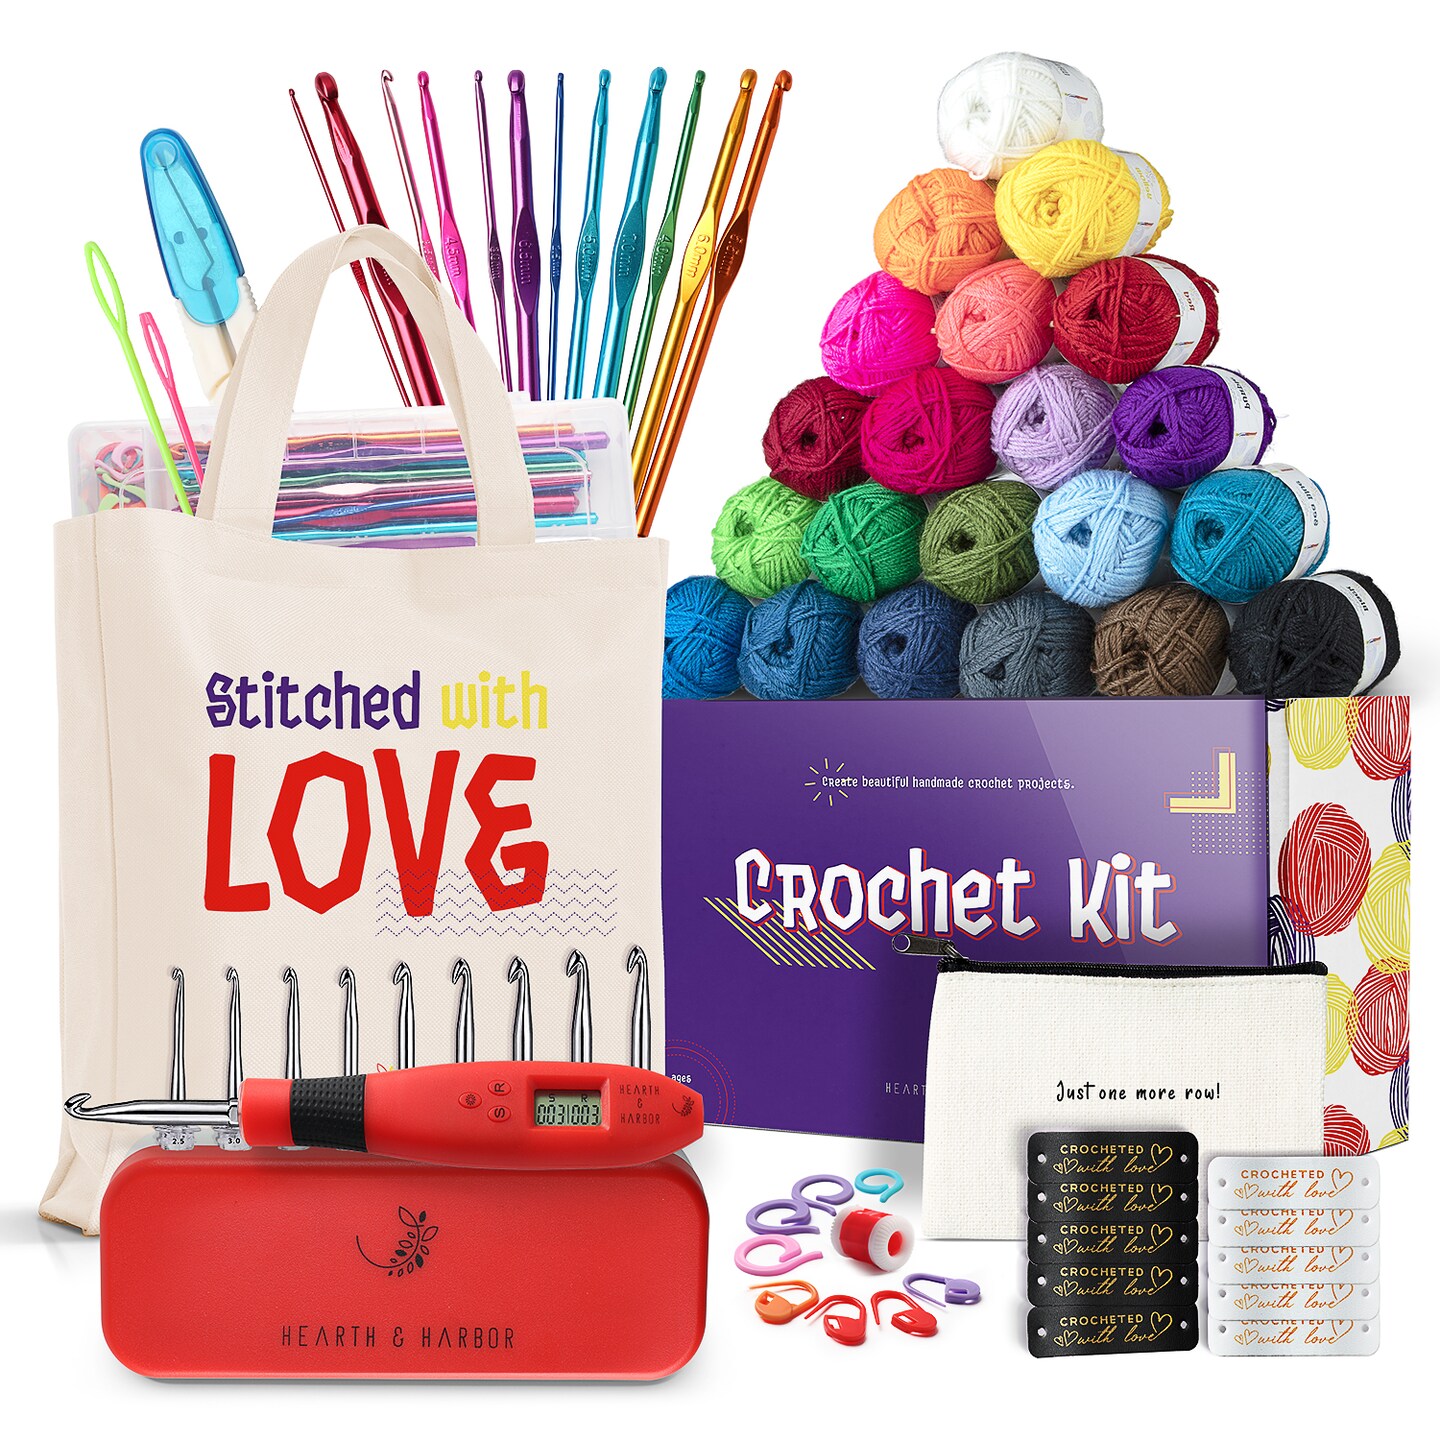 Hearth &#x26; Harbor Crochet Kit with Digital Counting Crochet Hook Set